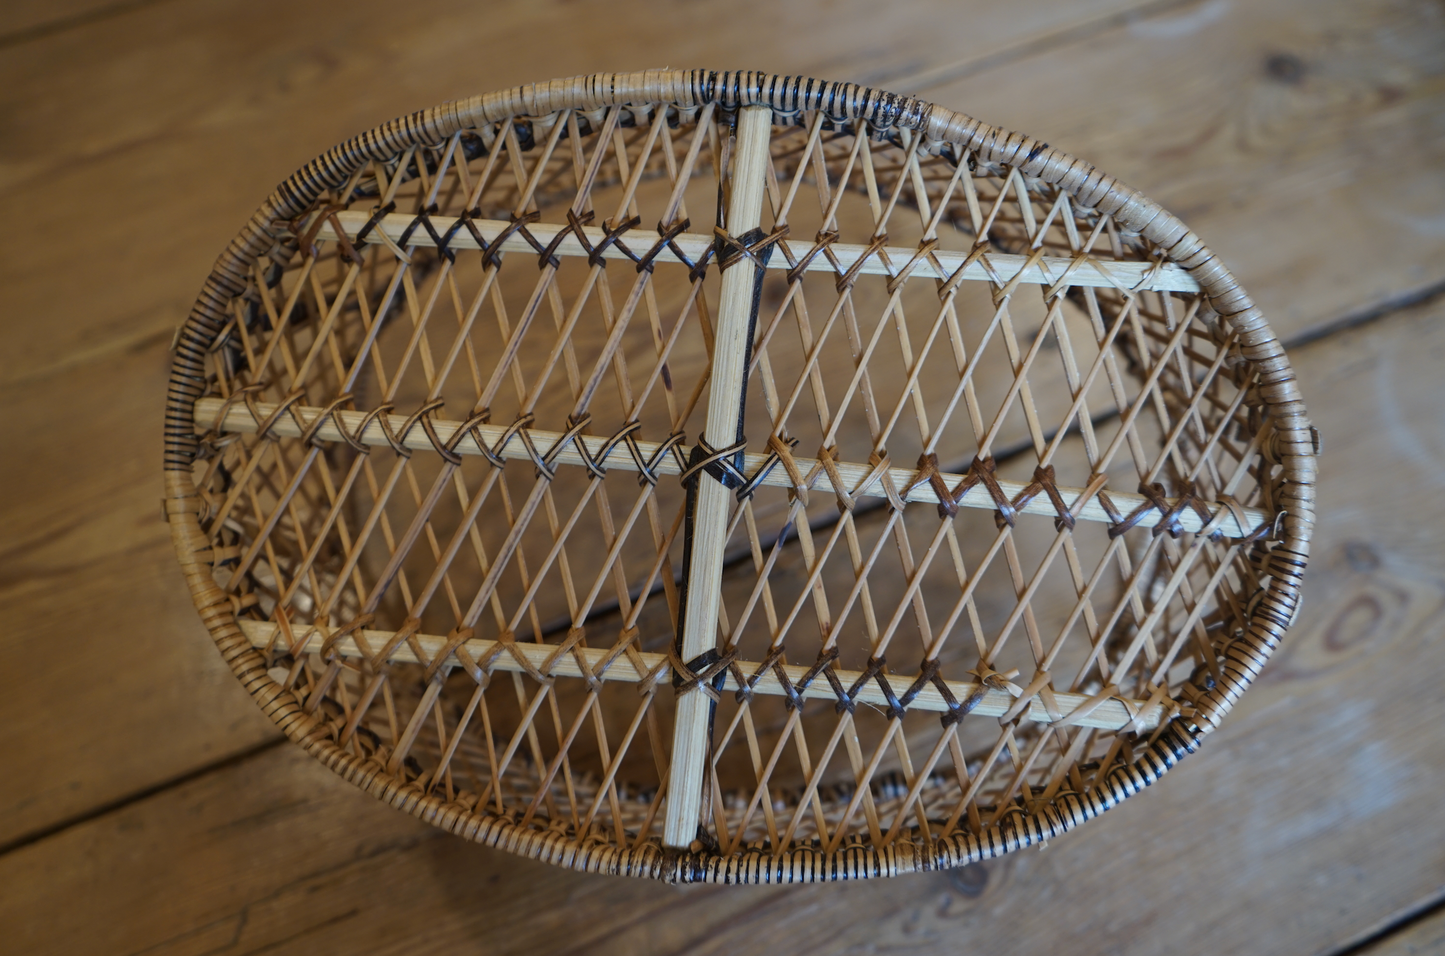 Finely Handwoven Rattan Basket